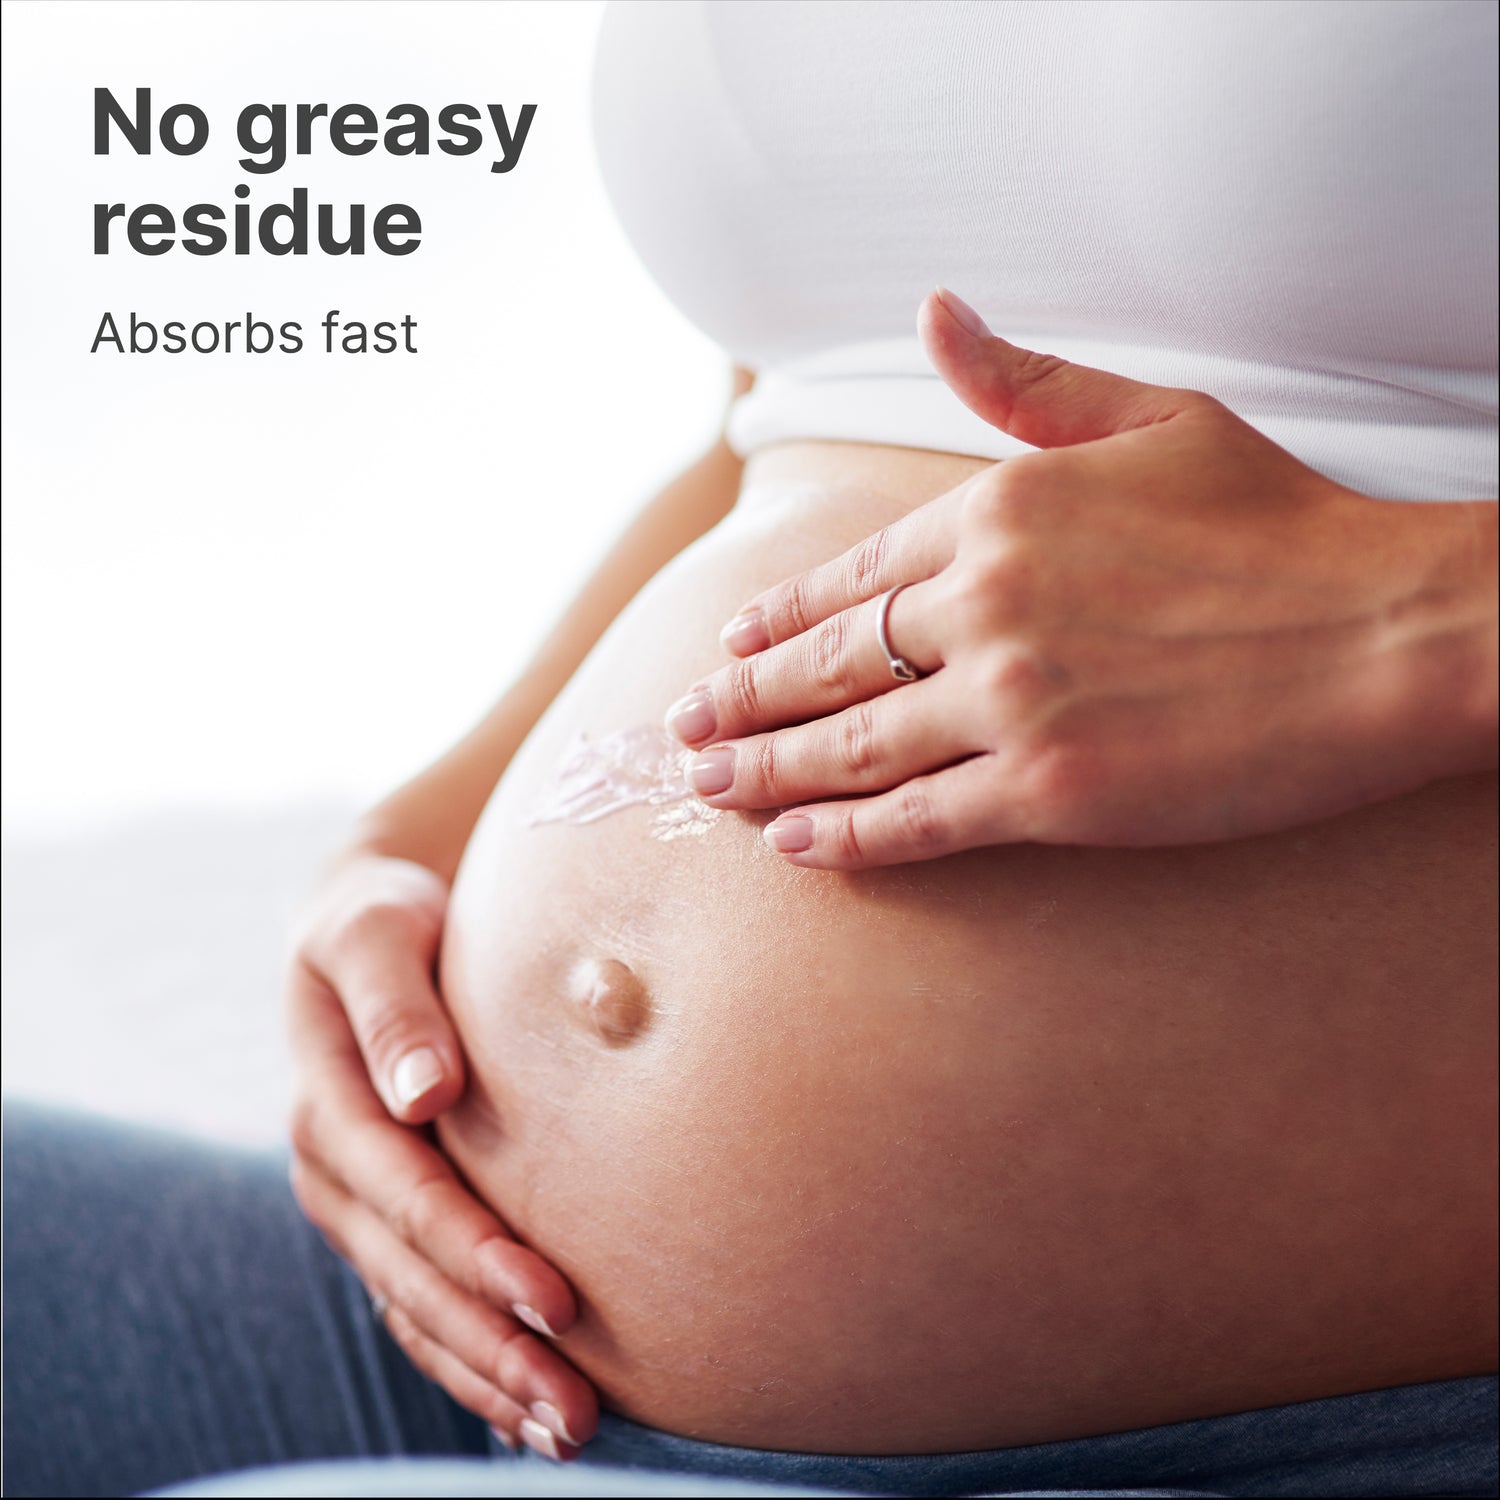 TriLASTIN Maternity Stretch Mark Prevention Cream - 2-pack